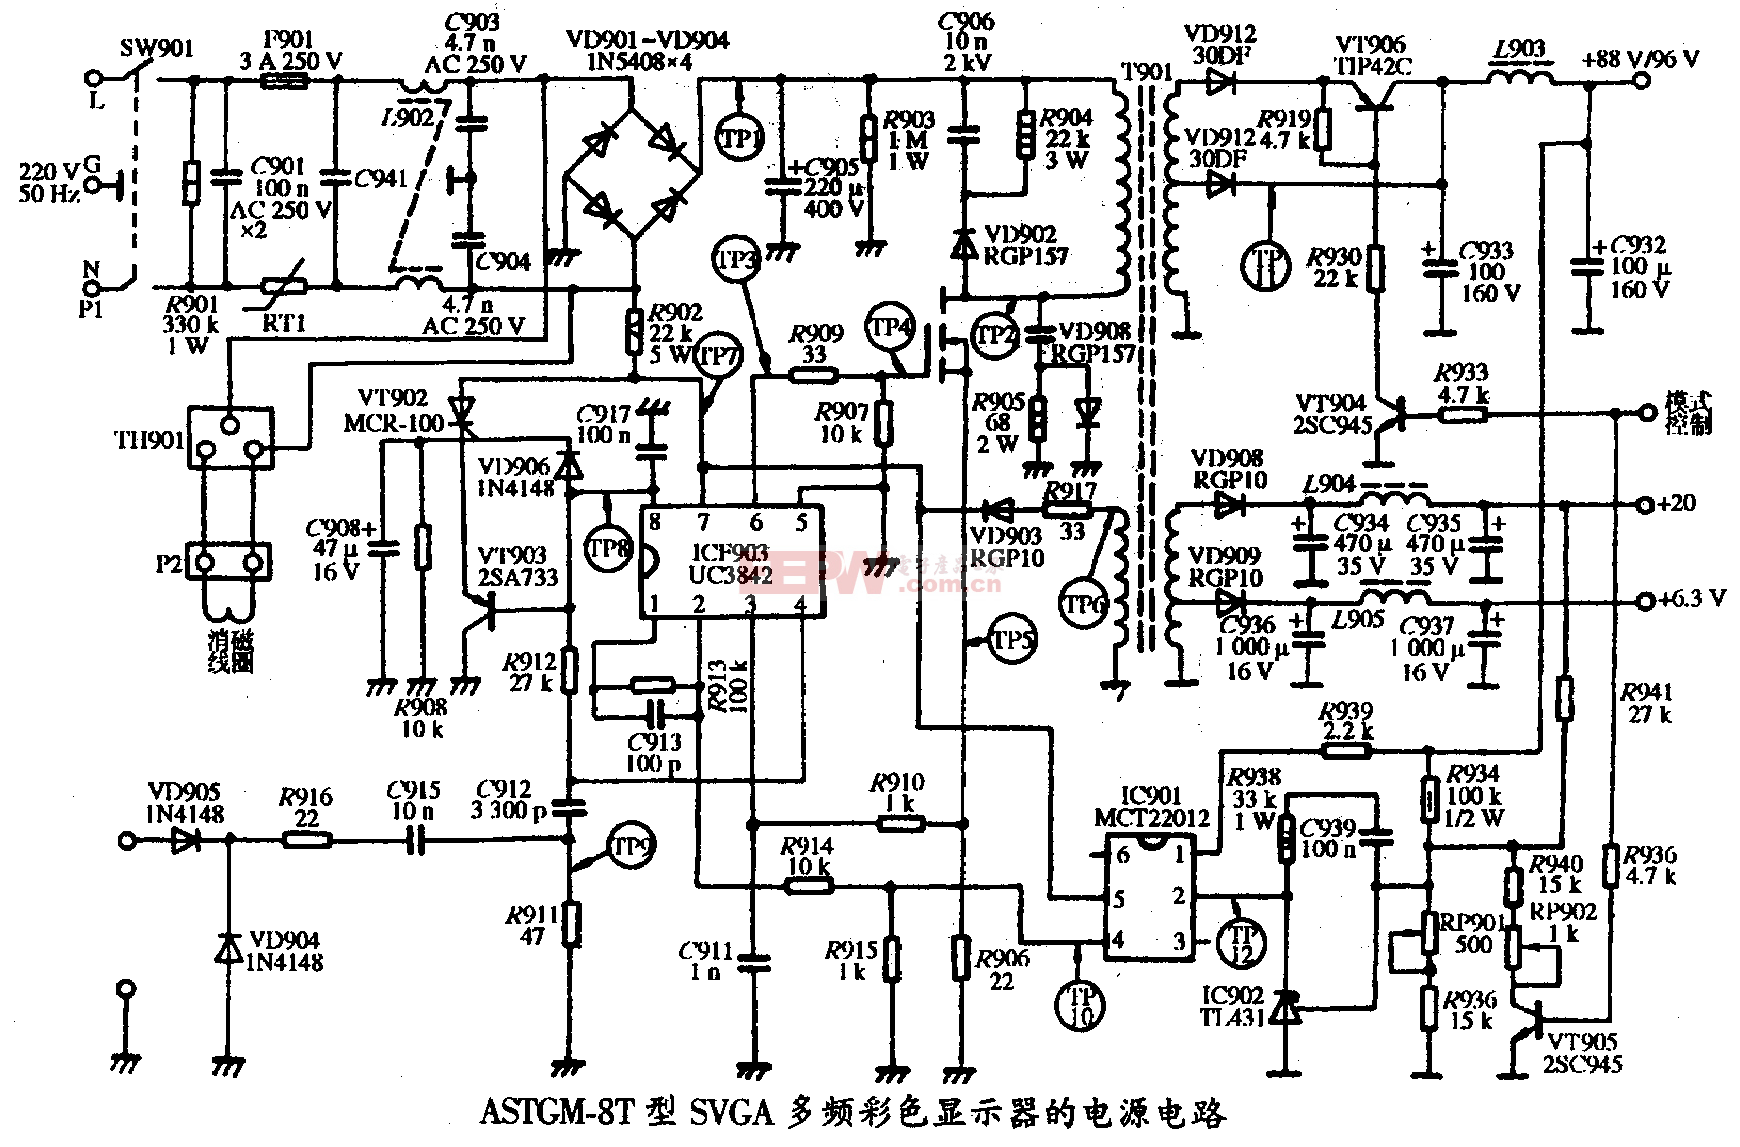 12、AST GM-8T型SVGA彩色显示器的电源电路图